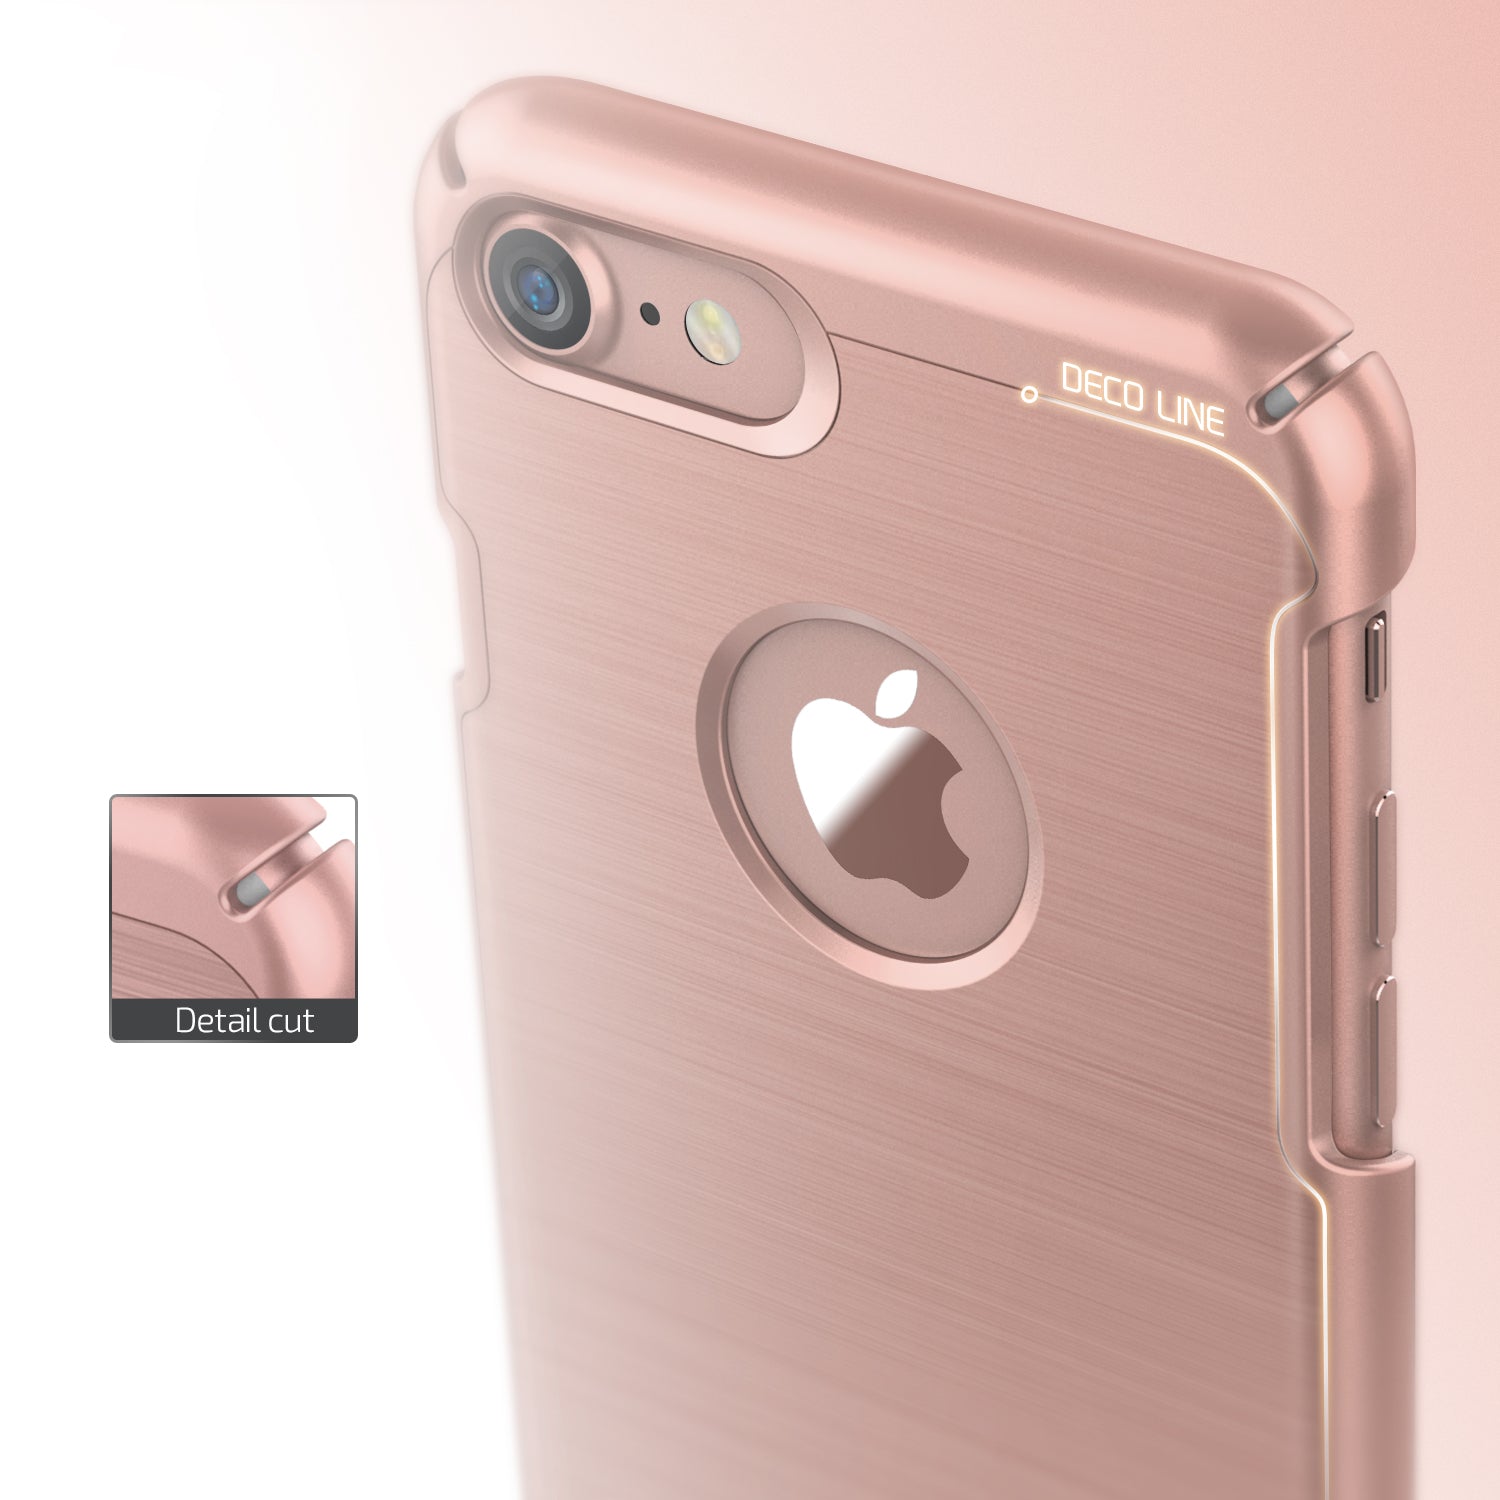 Simpli Lite Series Original From VRS Design Slim Case For iPhone 7 Plus Rose Gold